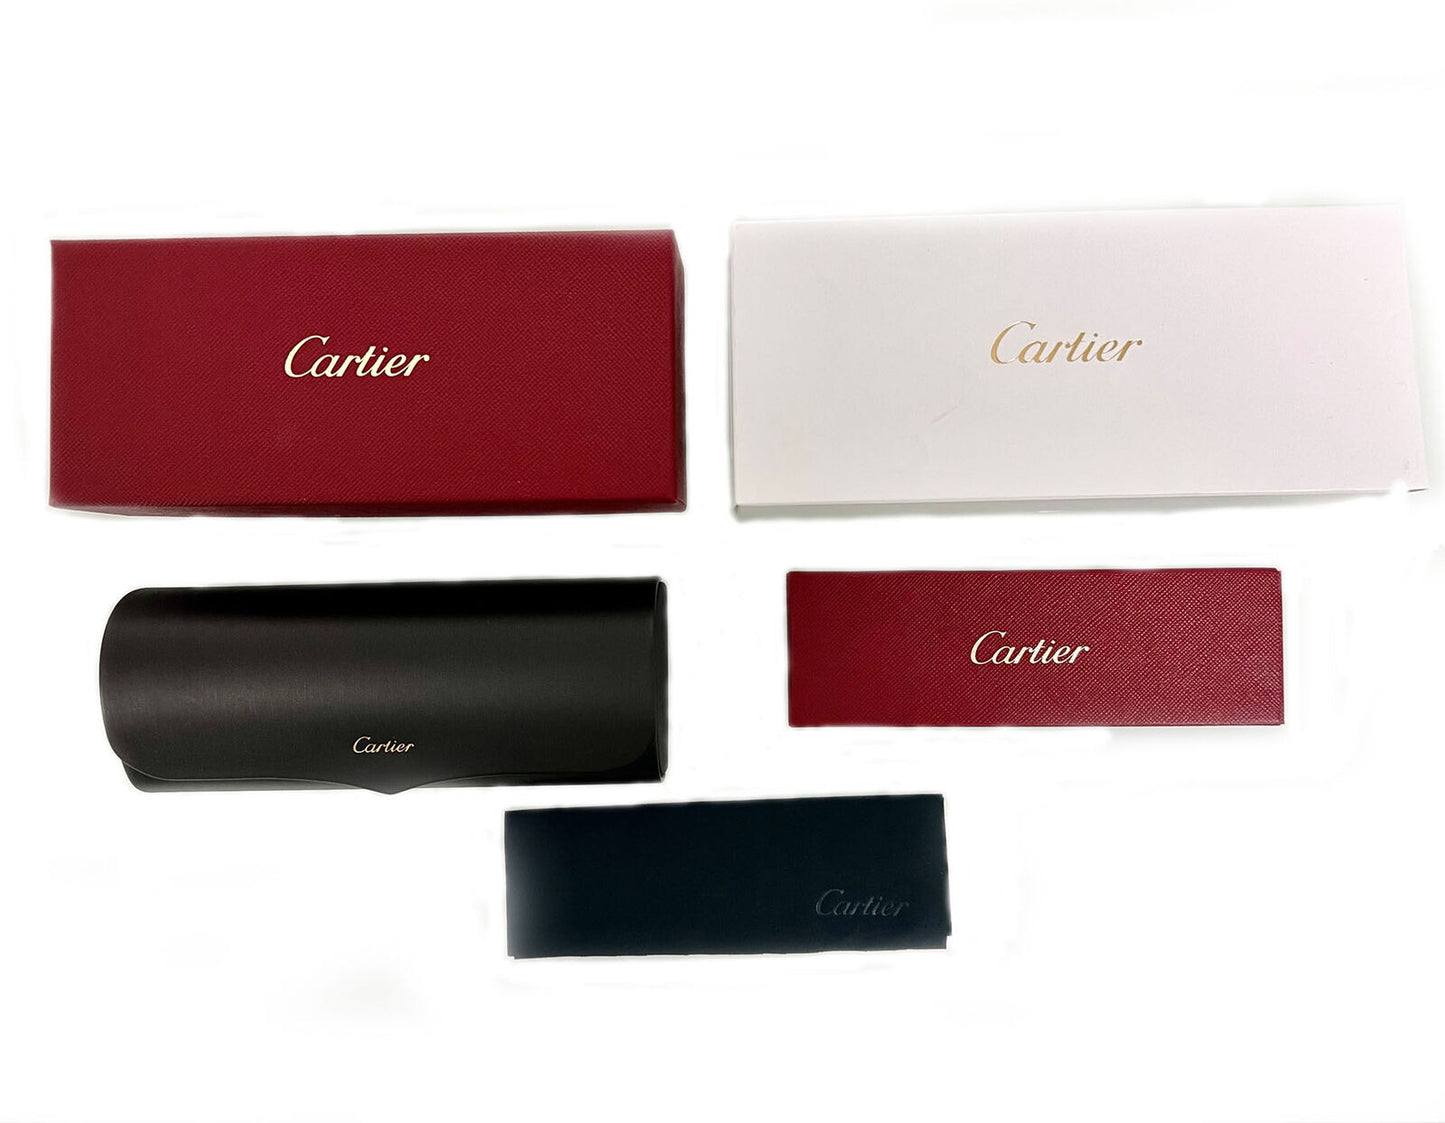 Cartier CT0481o-001 53mm New Eyeglasses